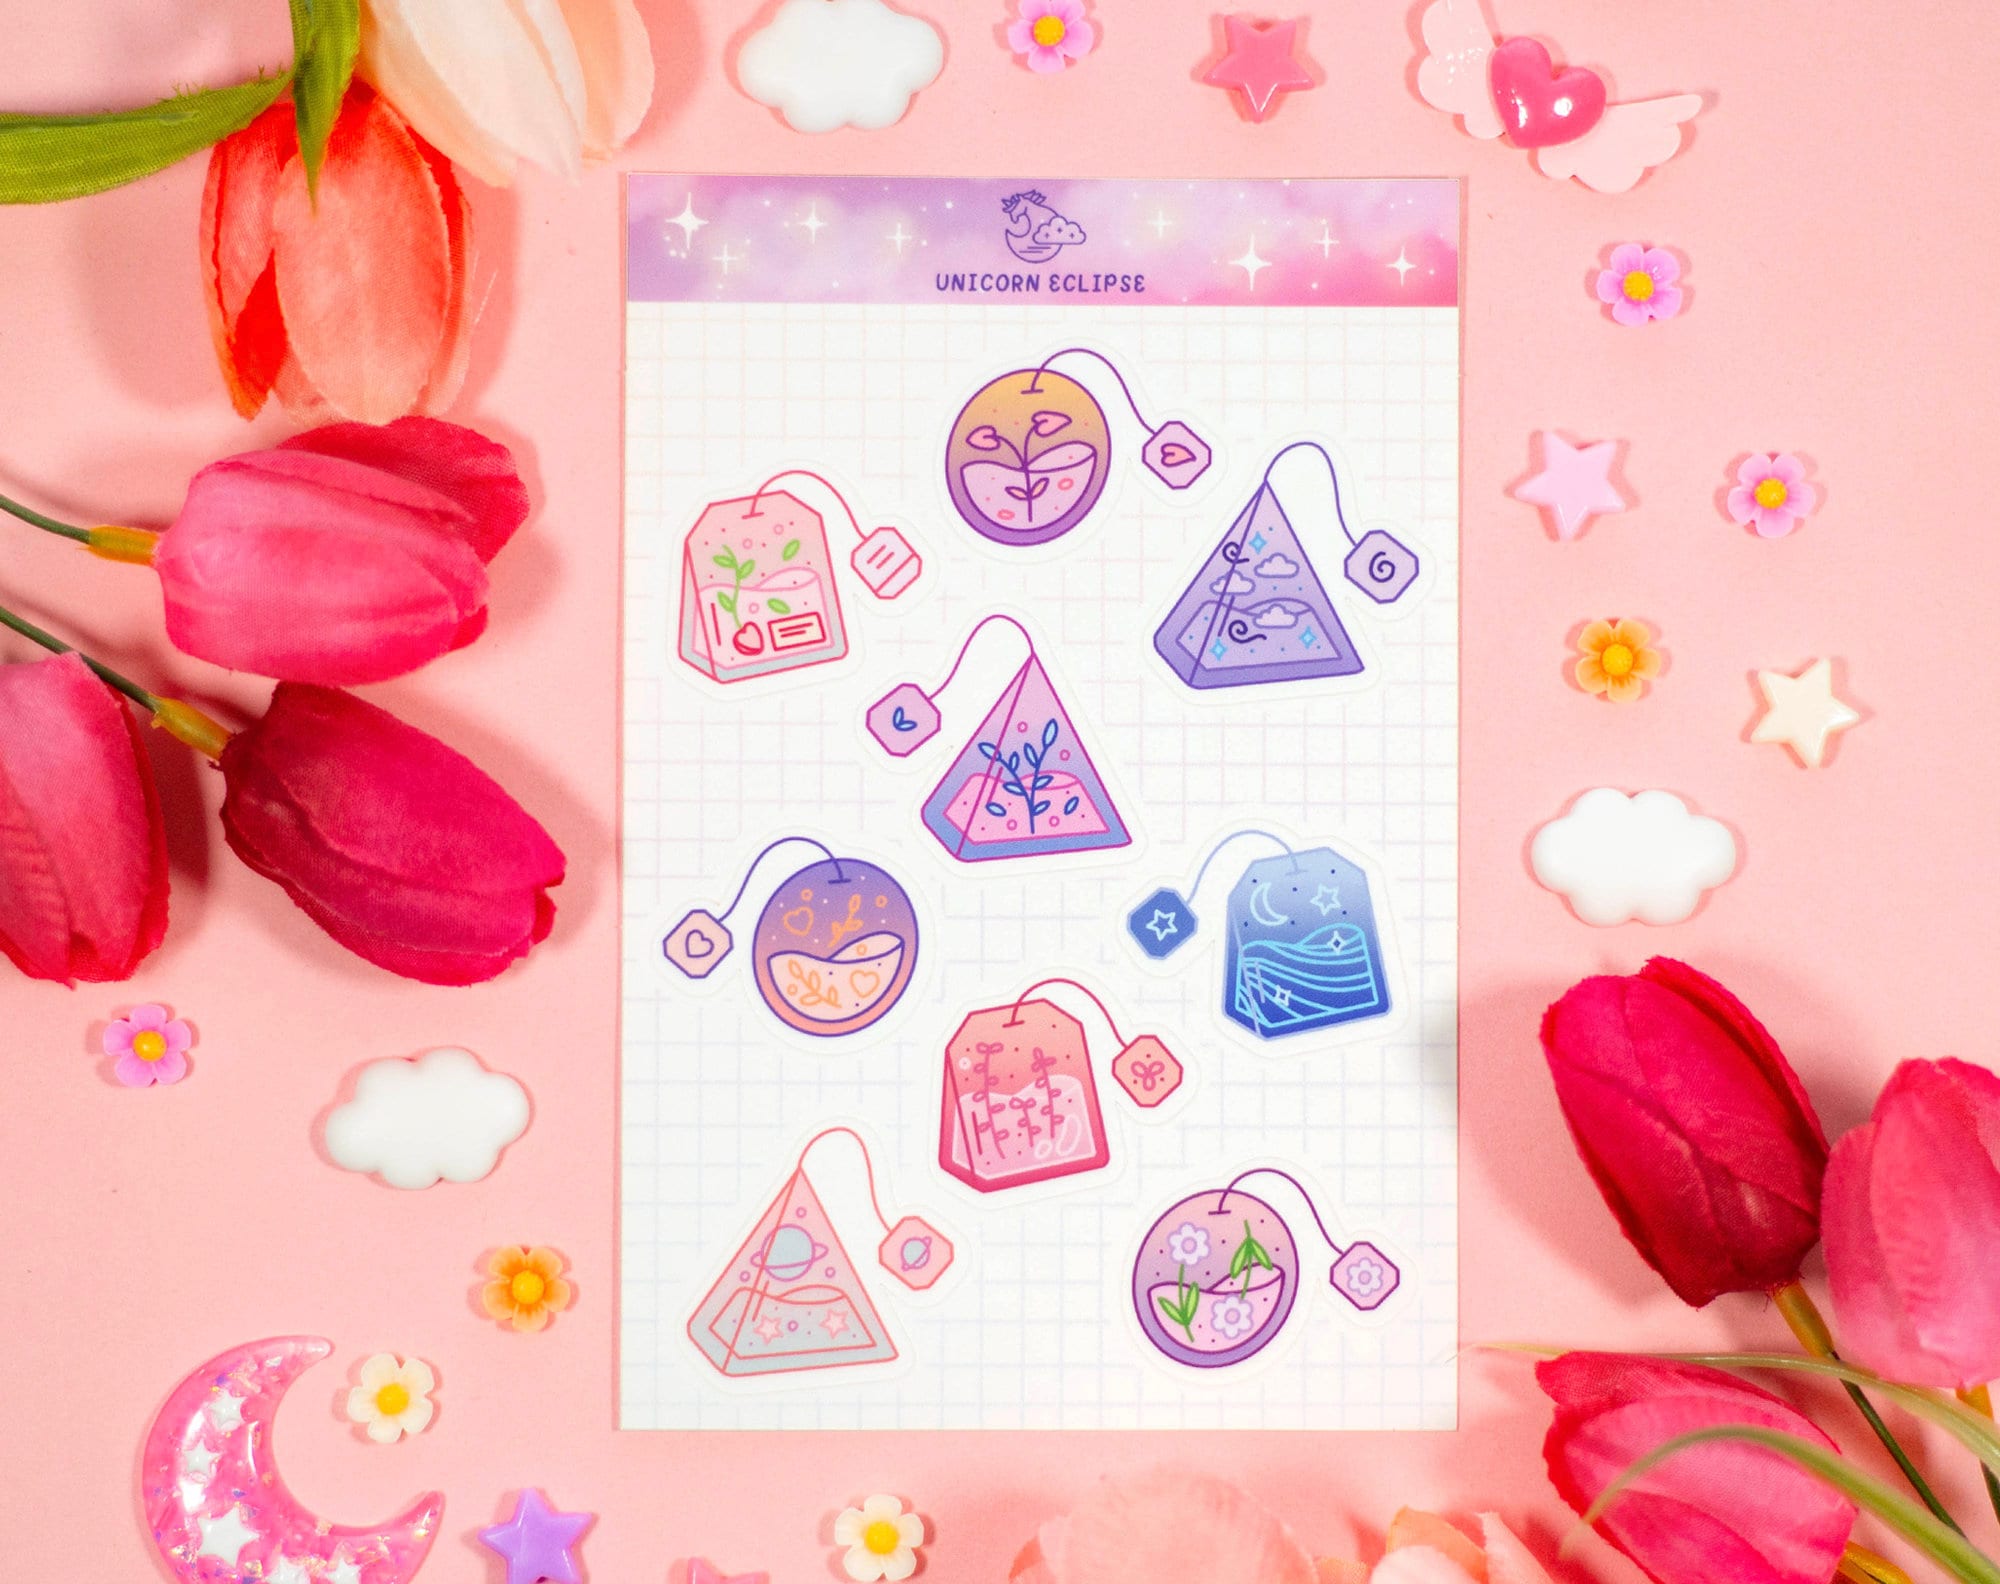 Tea Bags Aesthetic Cute Sticker Sheet Planner Stickers, Decorative